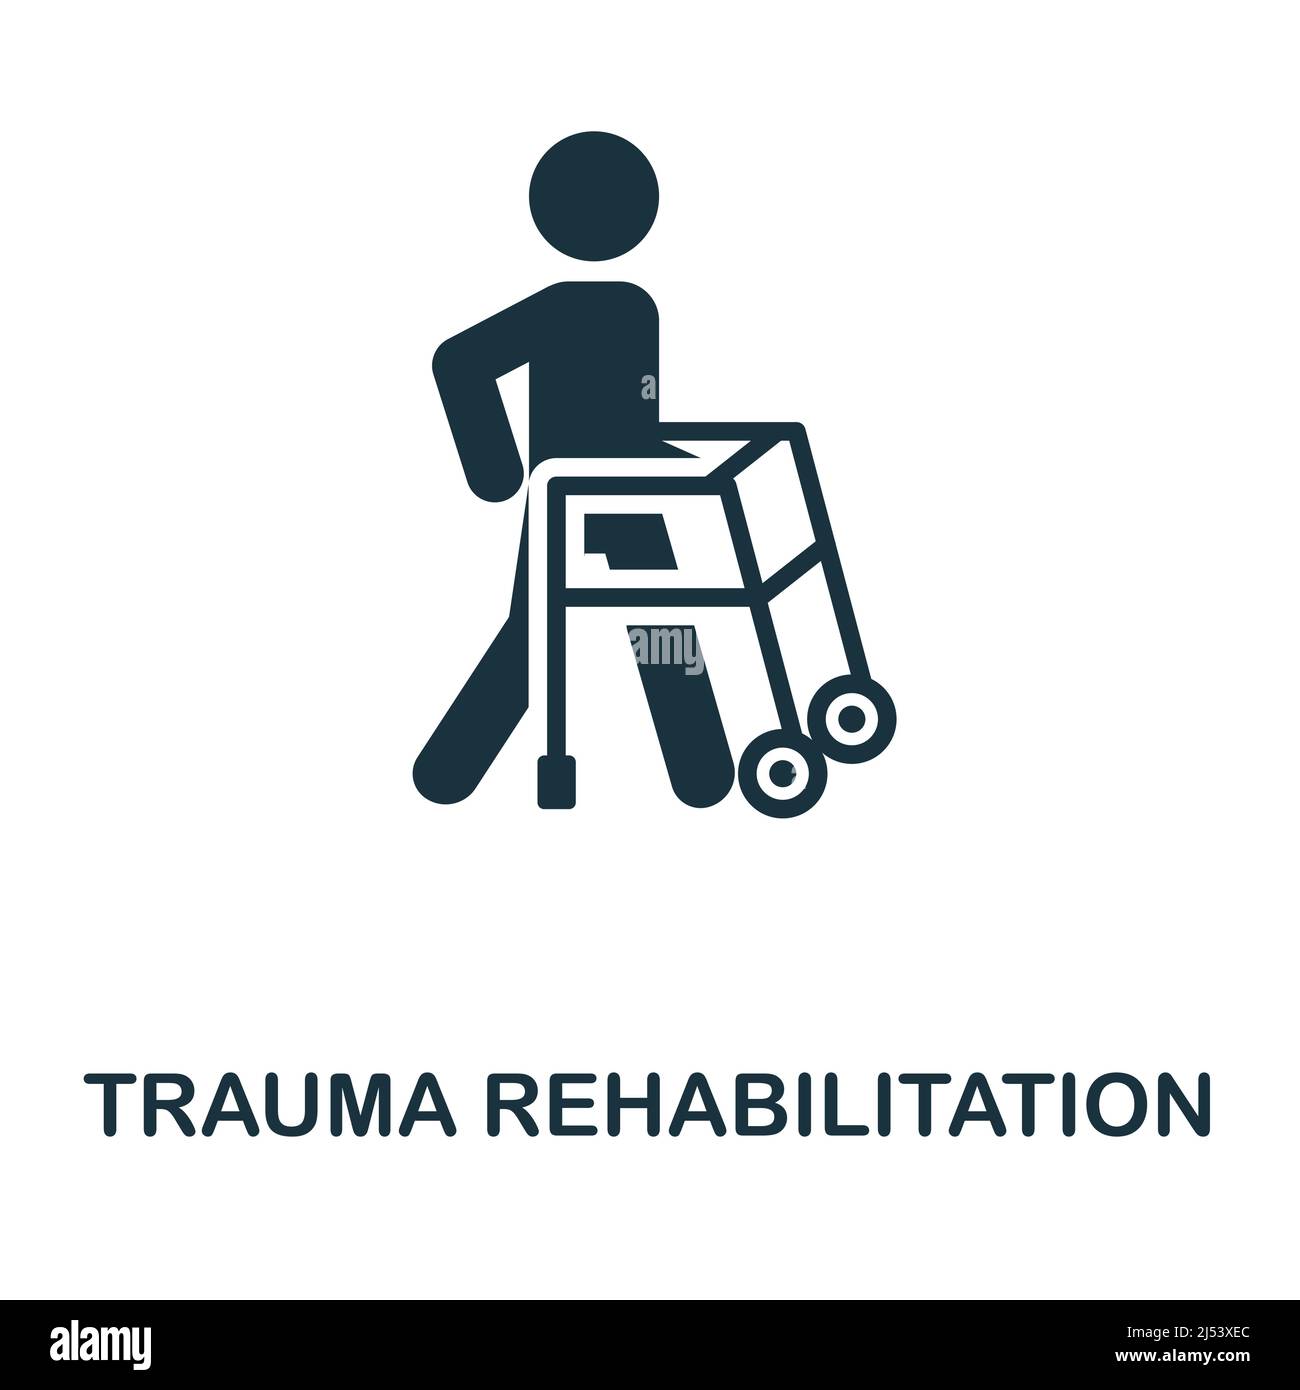 Symbol für Trauma Rehabilitation. Monochrom Simple Trauma Rehabilitation Icon für Vorlagen, Webdesign und Infografiken Stock Vektor